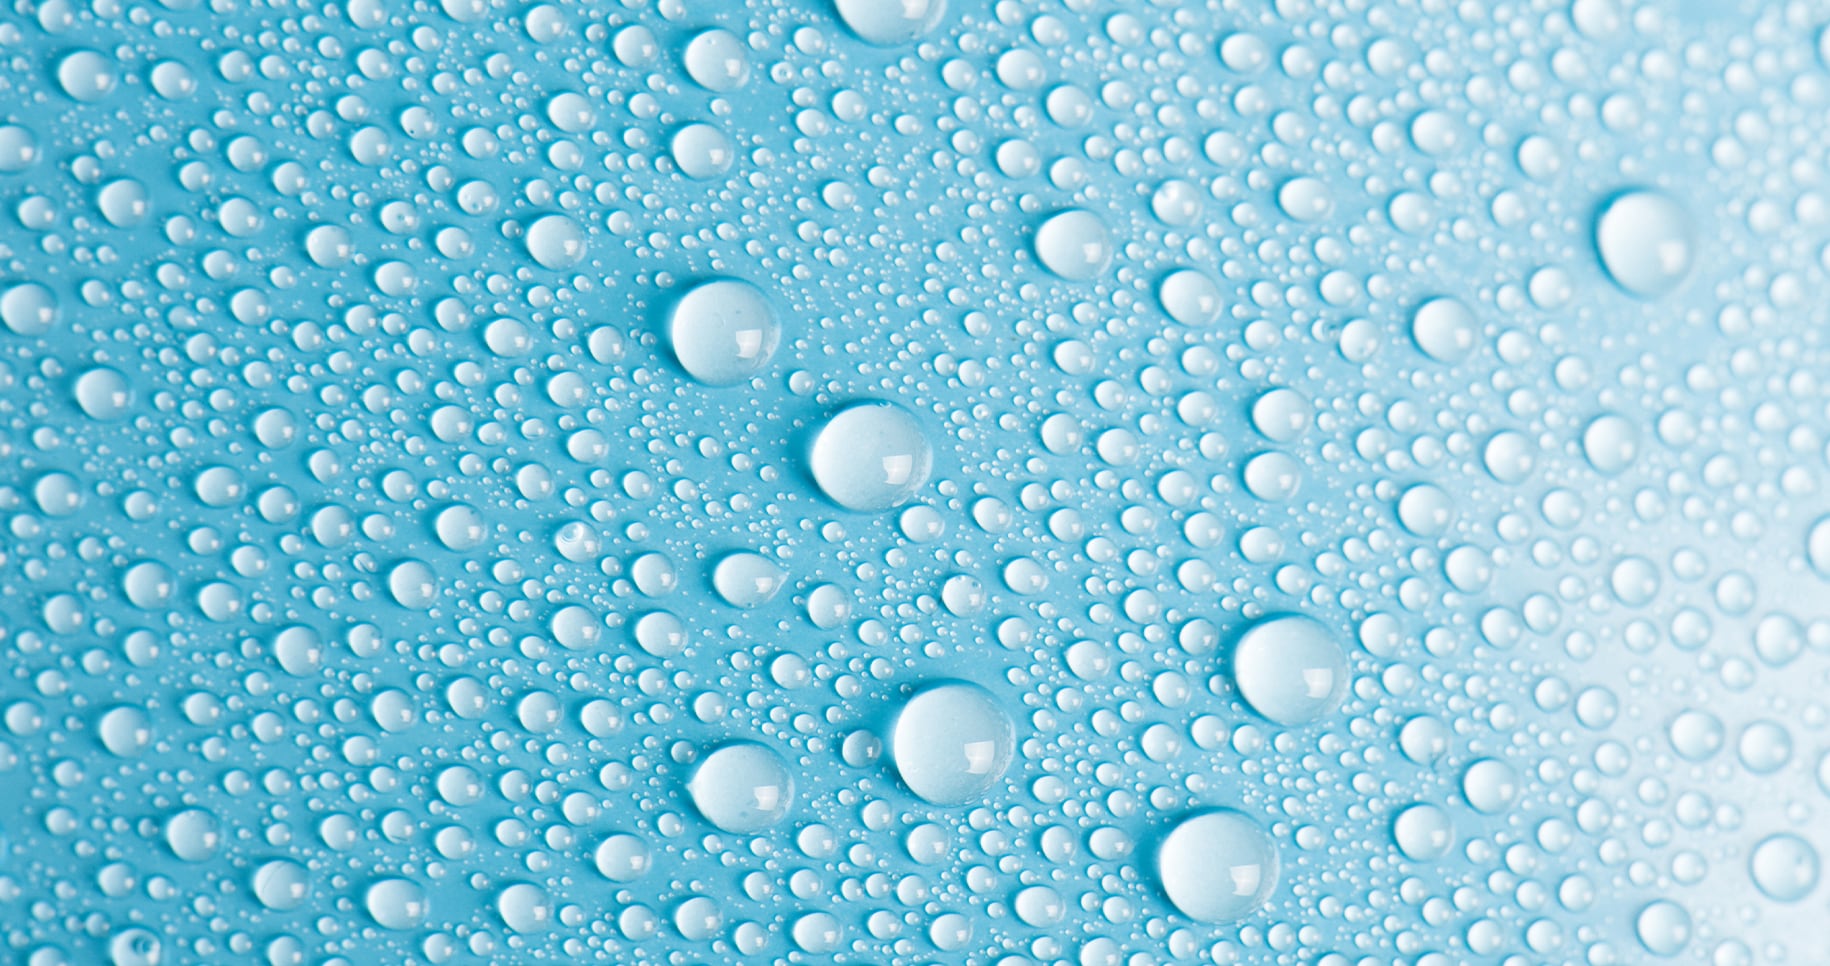 droplets on a light blue surface